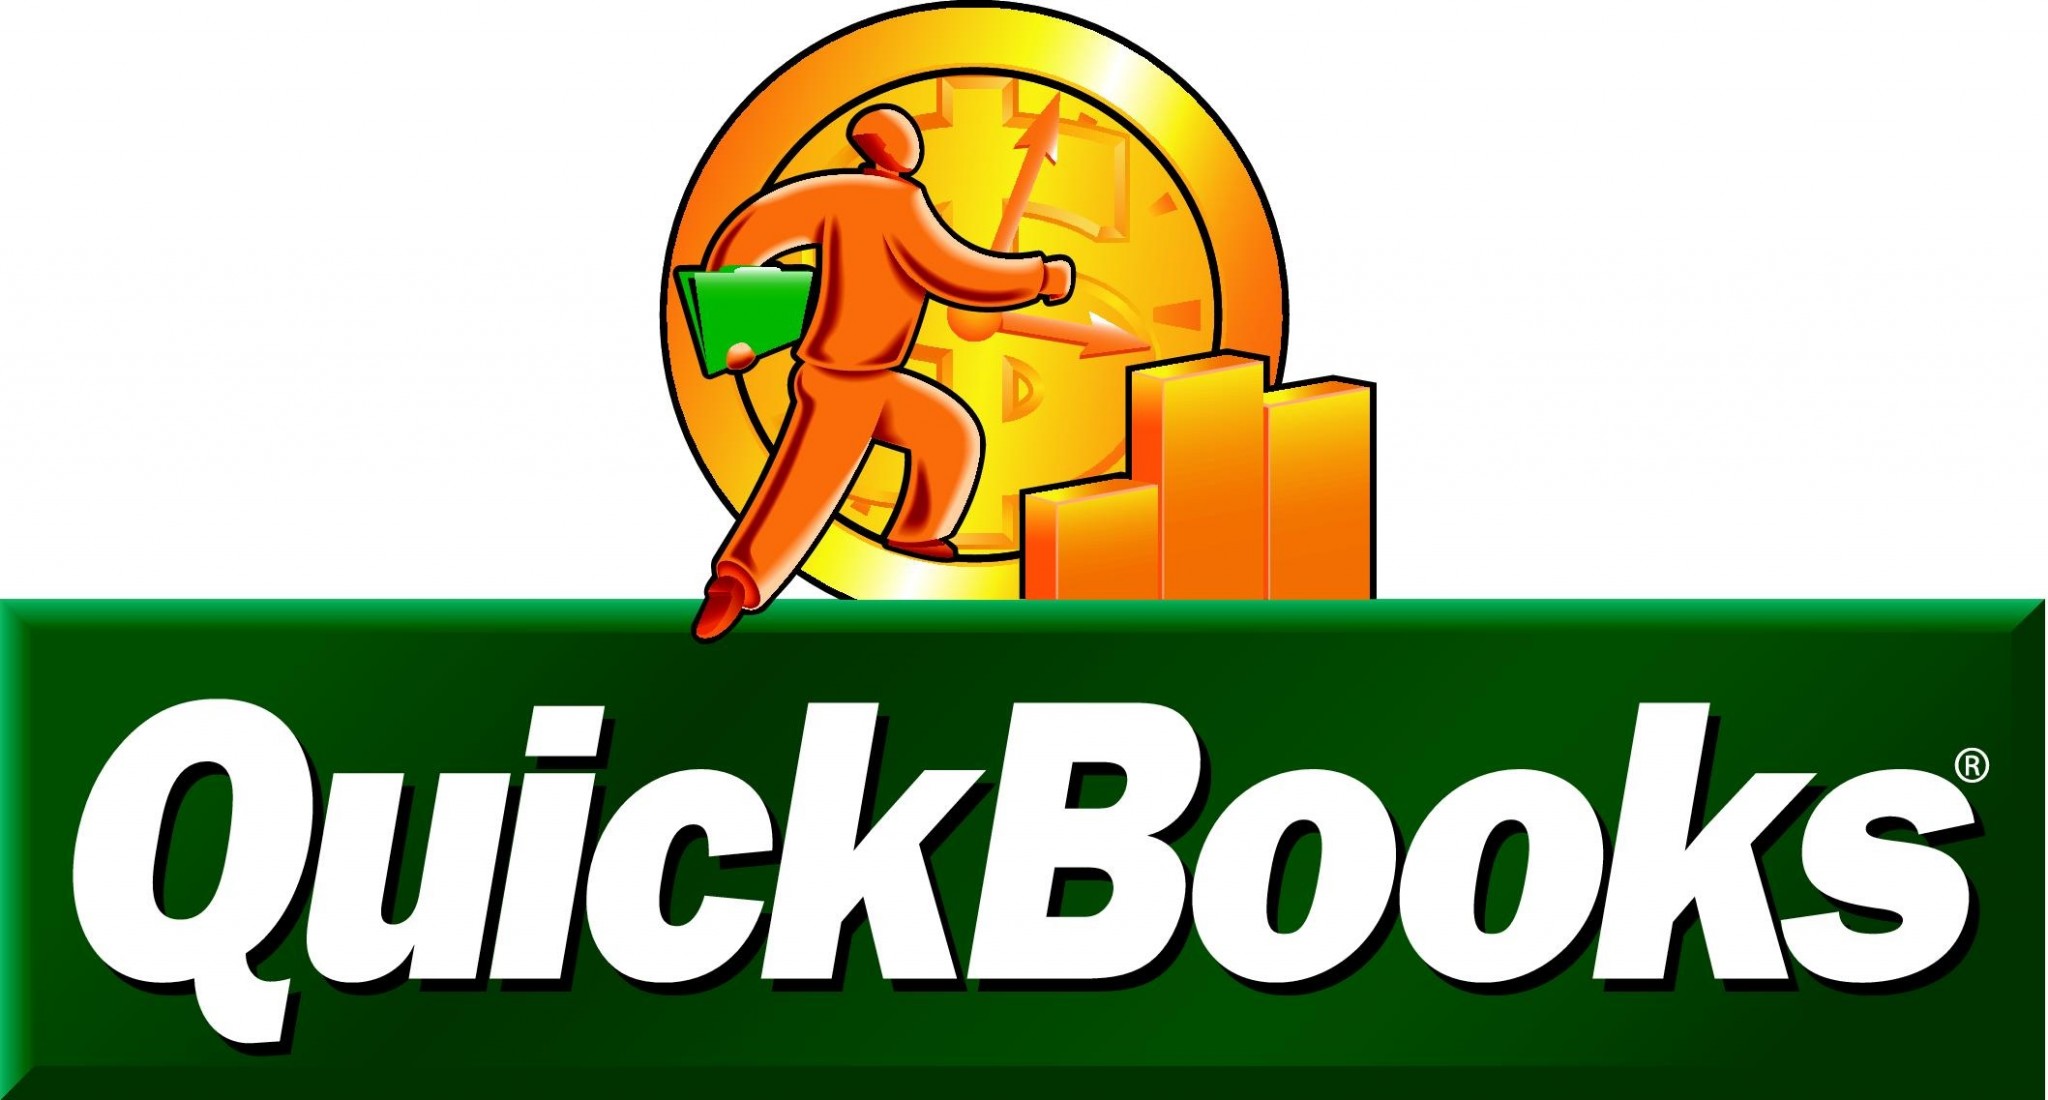 QuickBooks 2021 Crack 5.1.0 + Torrent Free Download [Latest]